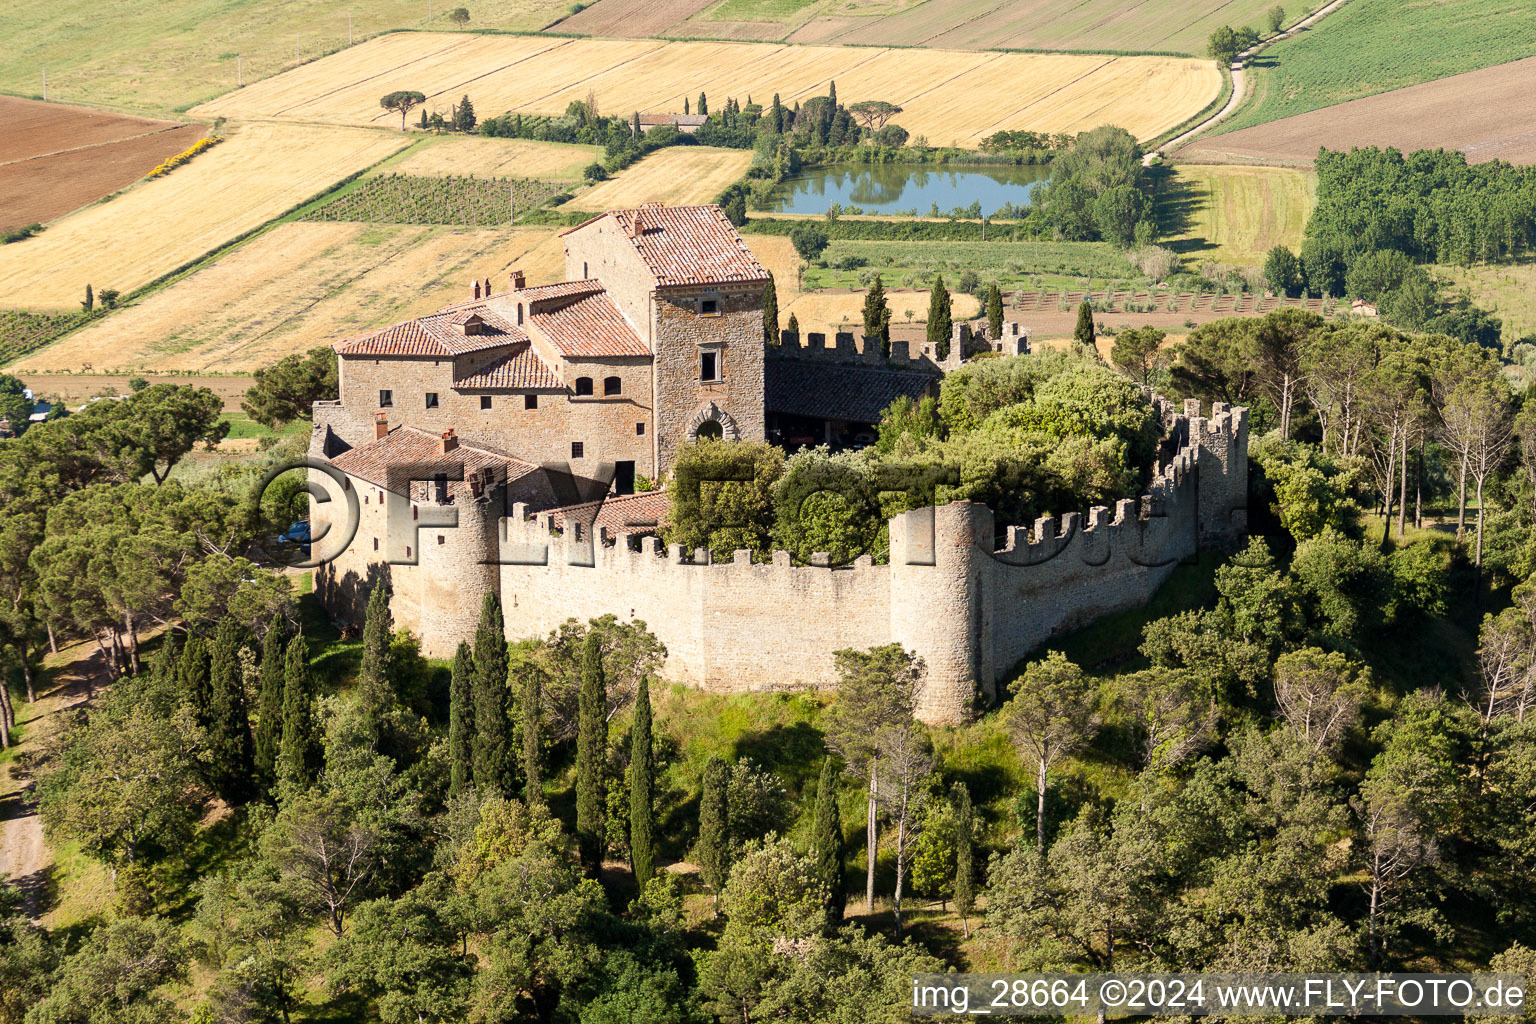 Luftbild von Burganlage der Veste Castello di Montegualandro am Traseminer See in Montecchio in Umbria, Italien